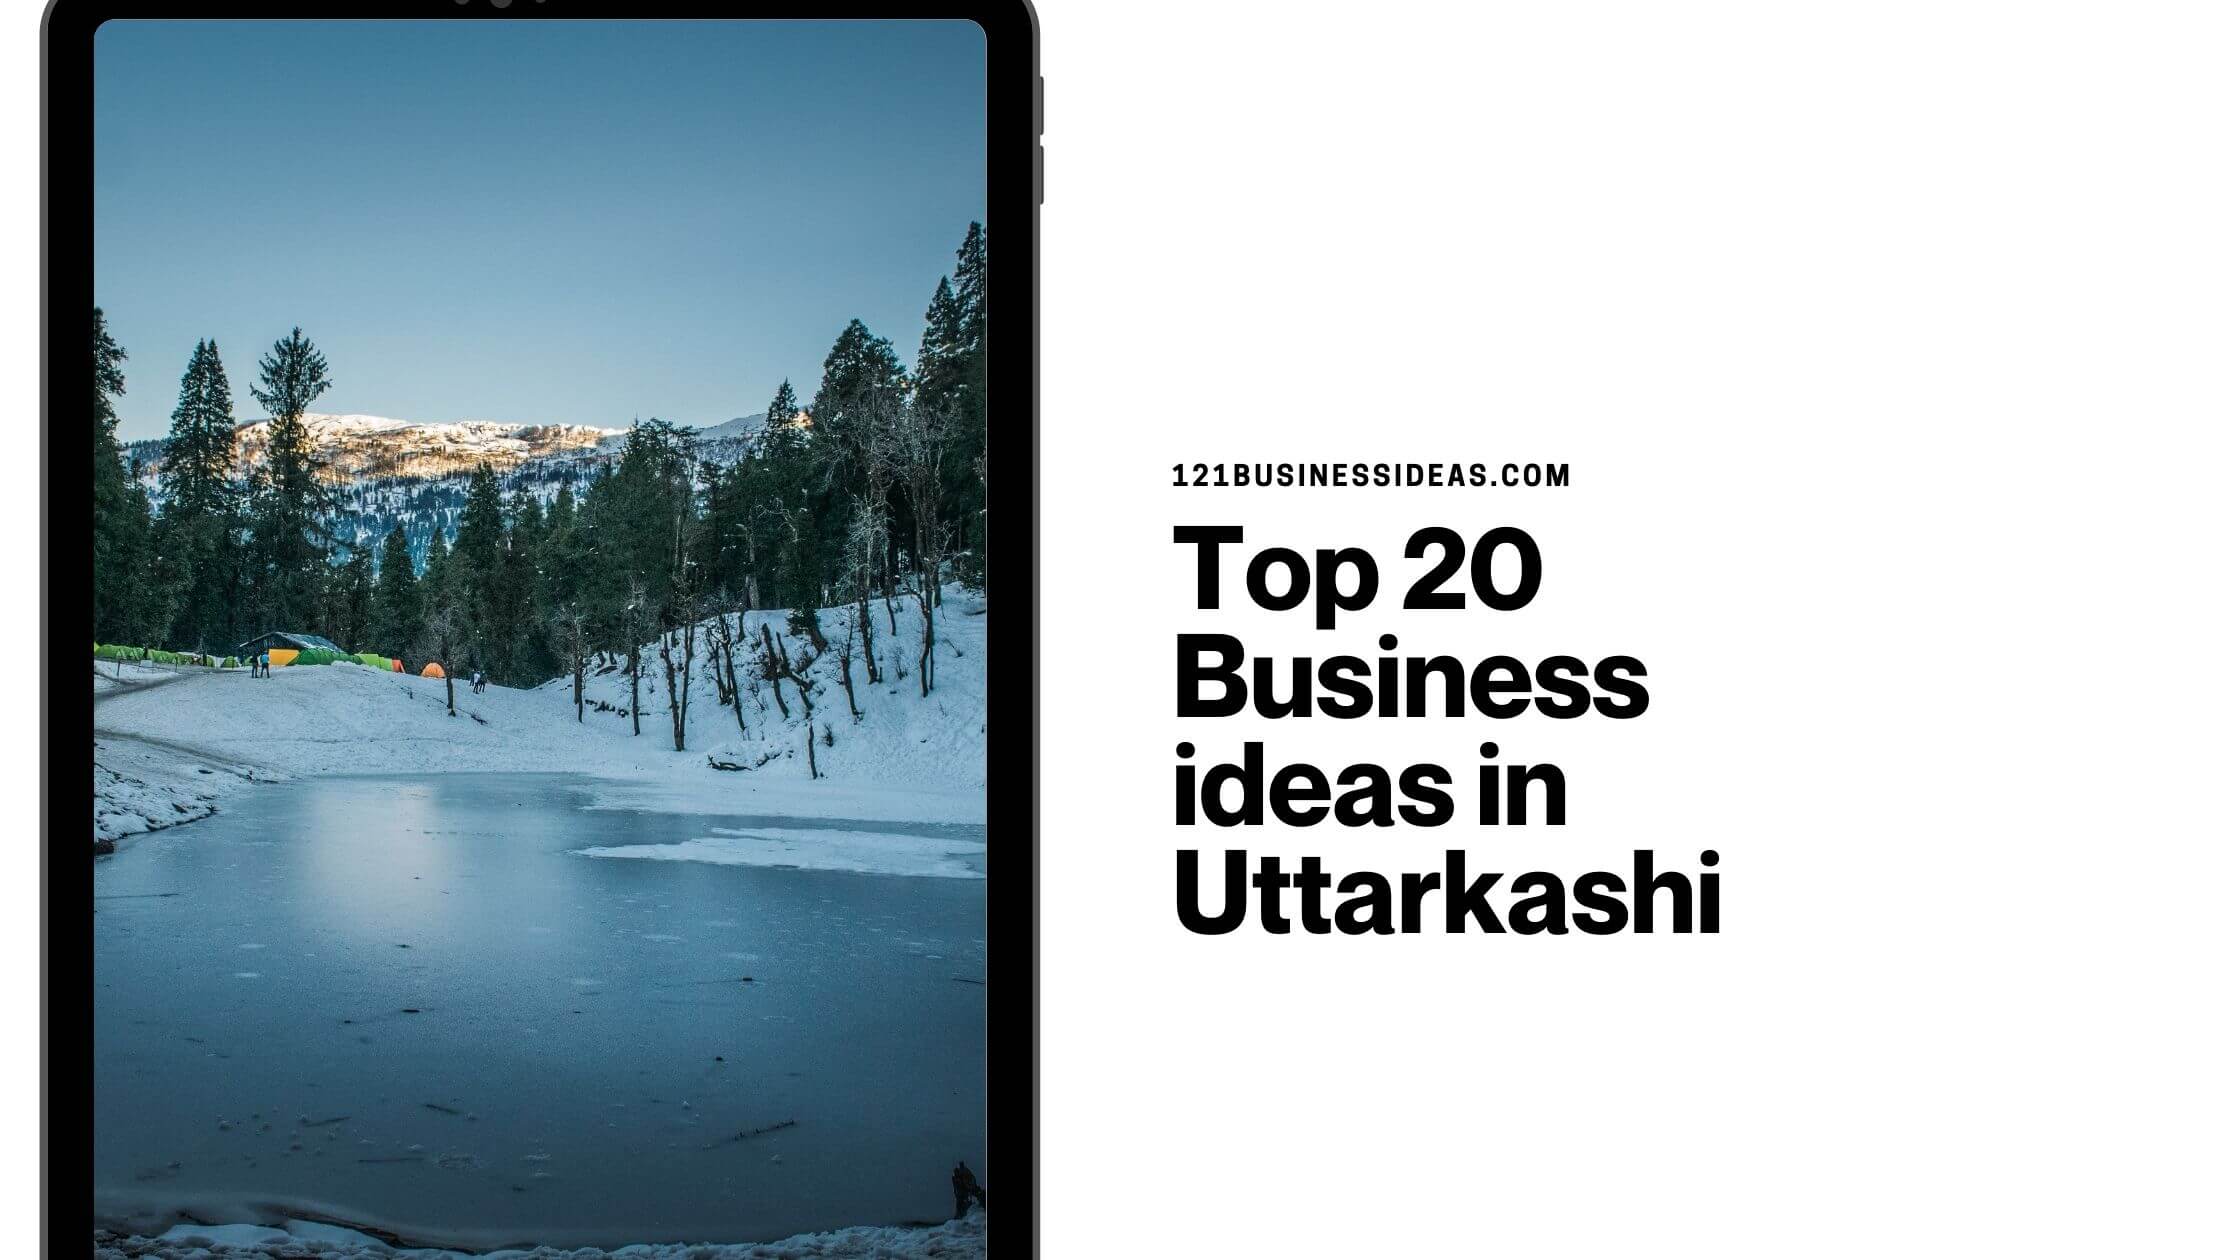 Top 20 Business ideas in Uttarkashi (1)